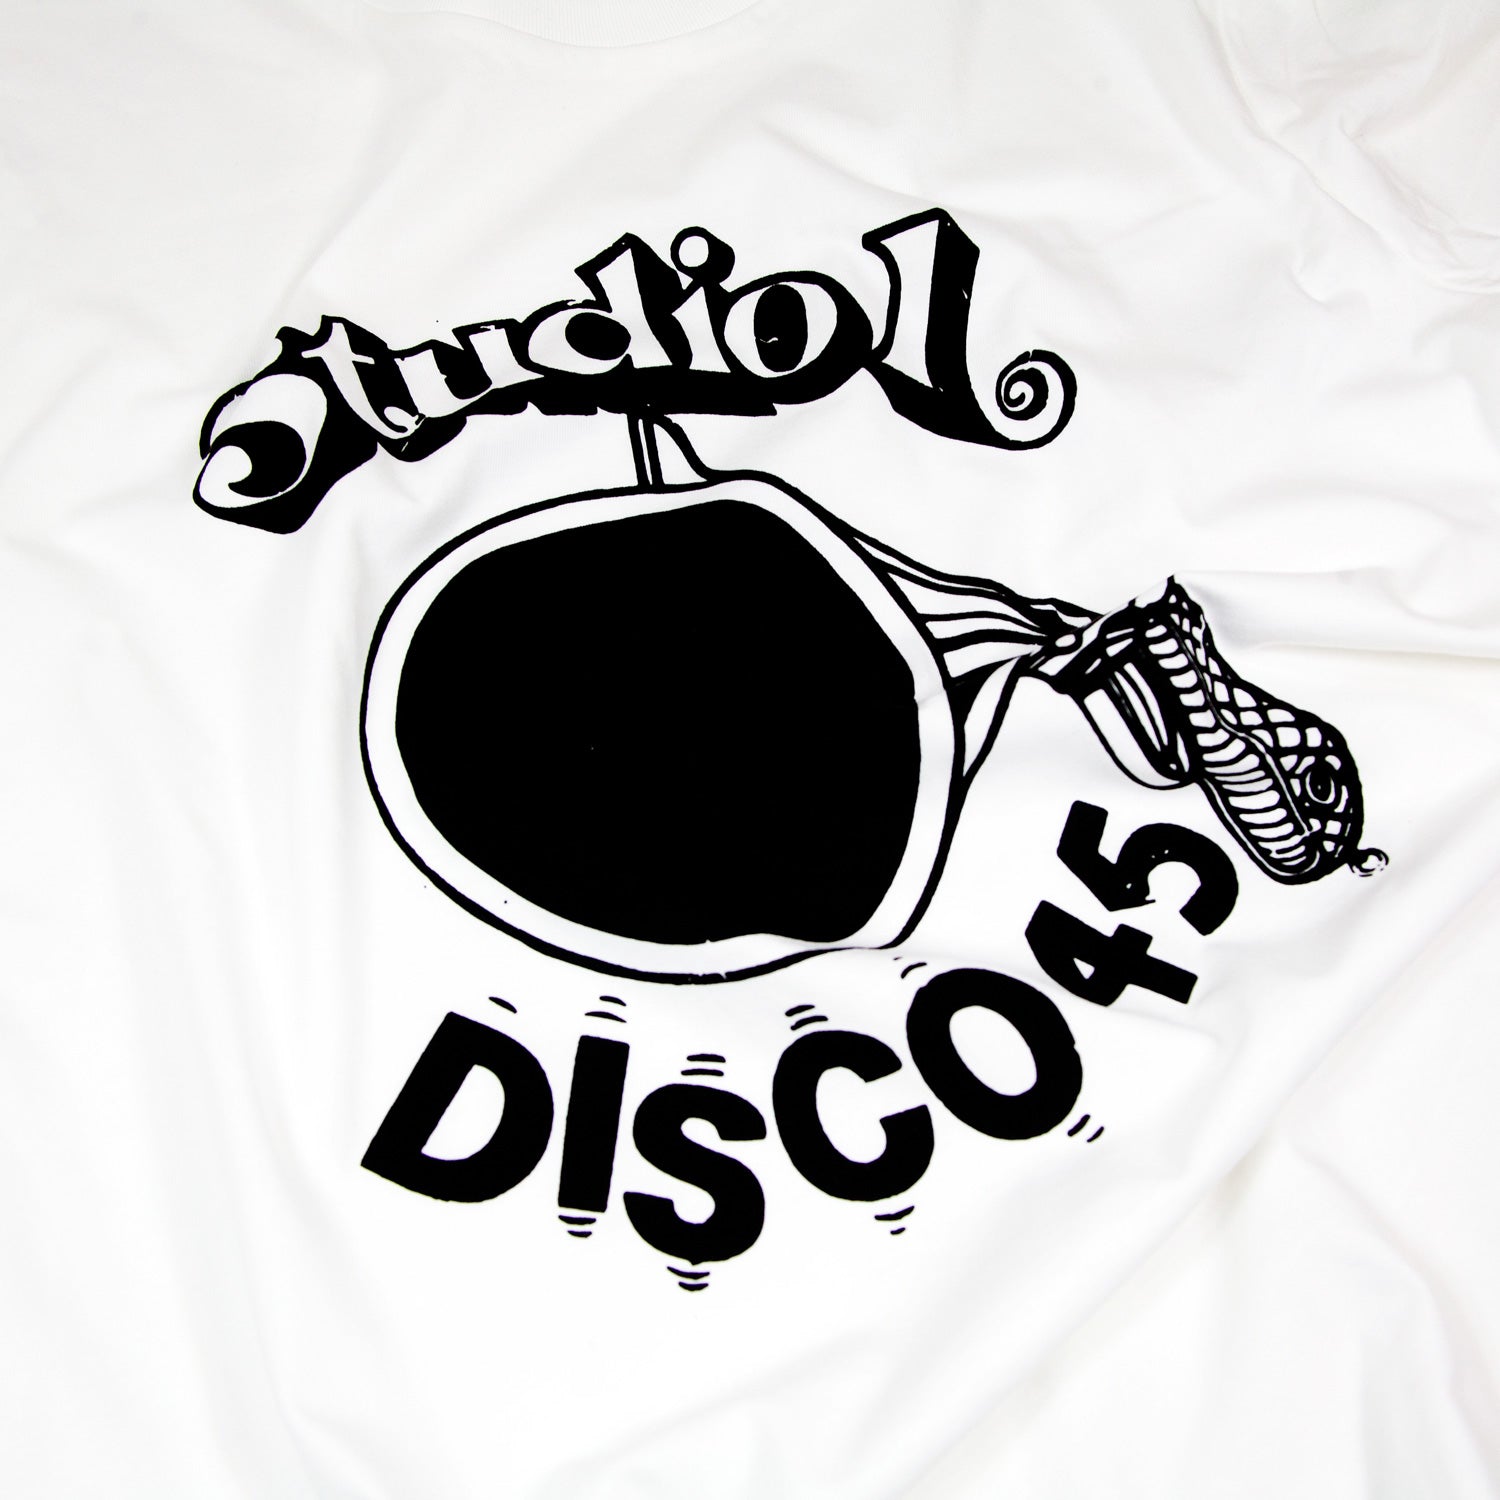 Disco-45-tee-detail